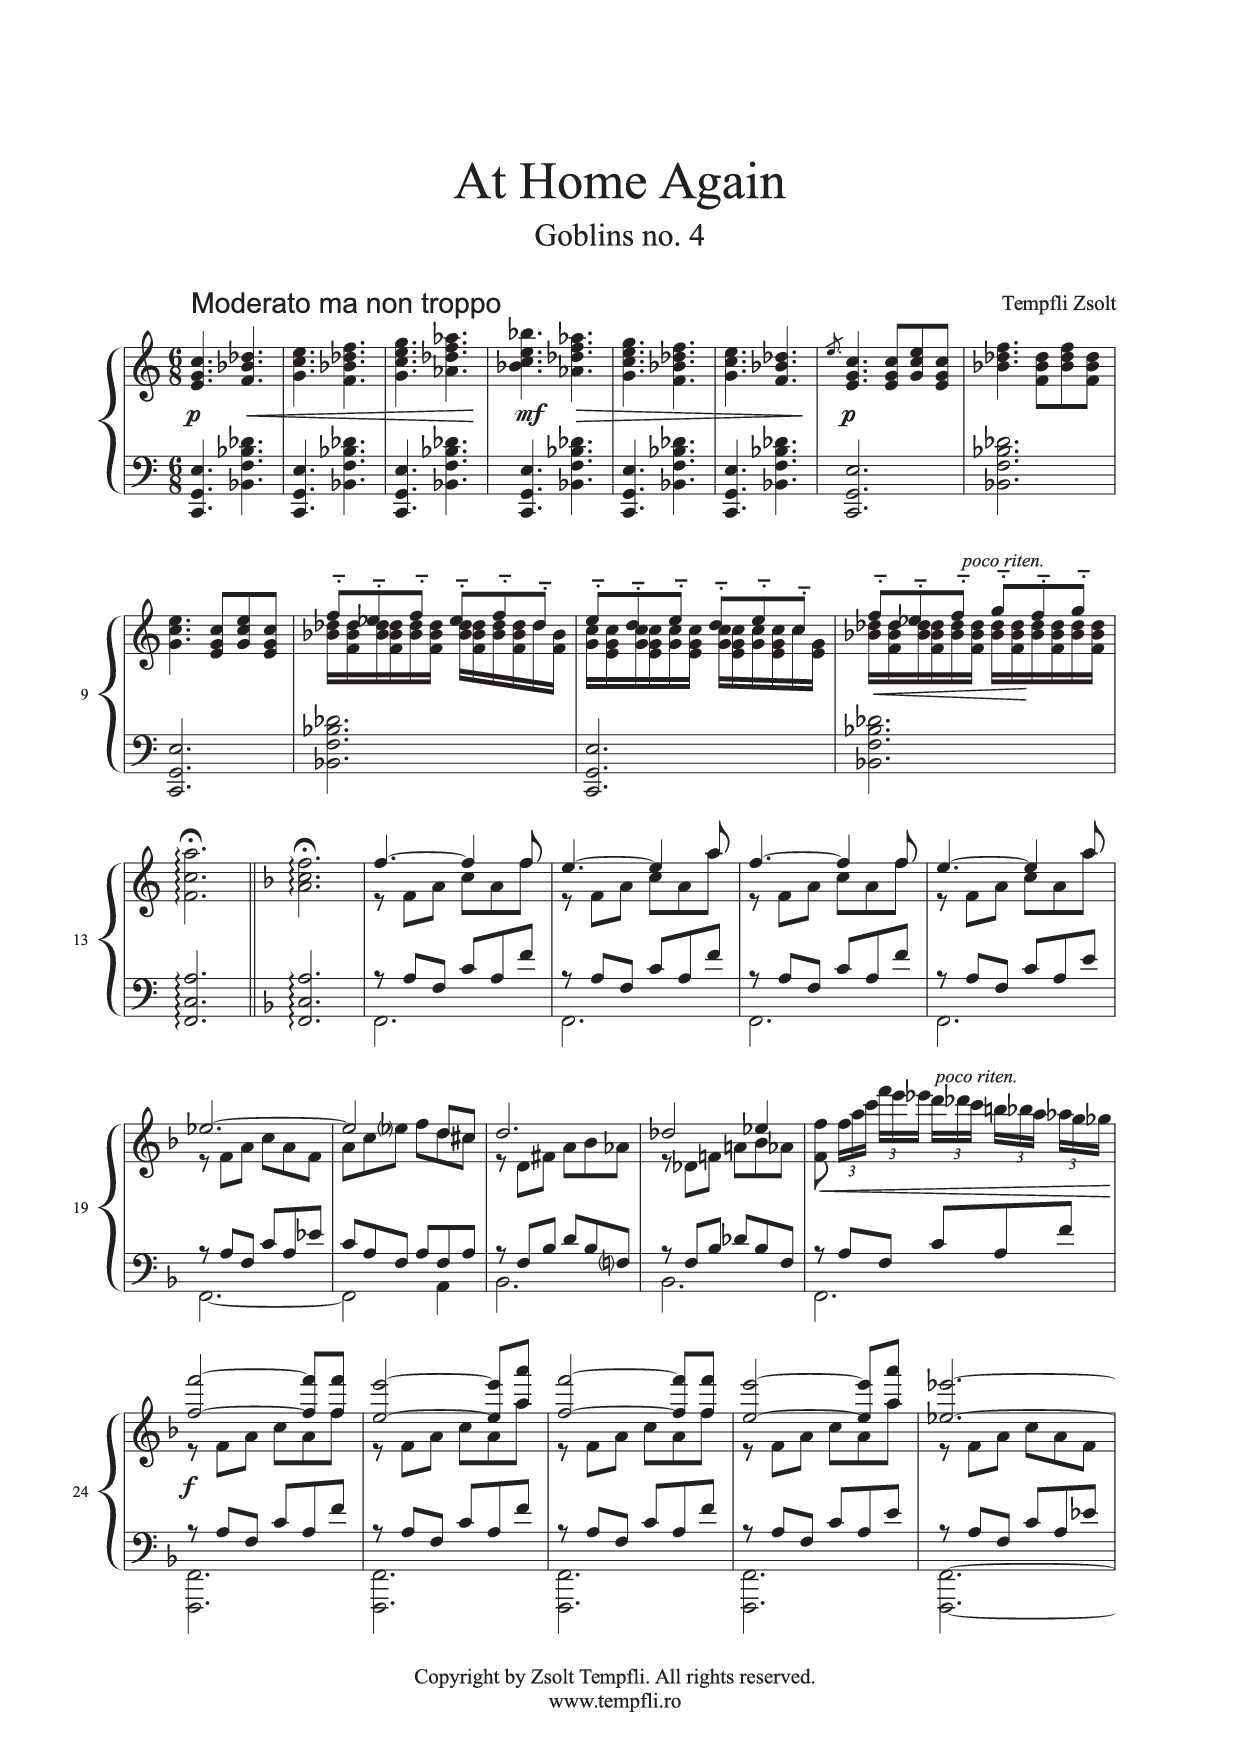 Zsolt Tempfli: Spiriduși - Acasă din nou op. 15 no. 4 pentru pian